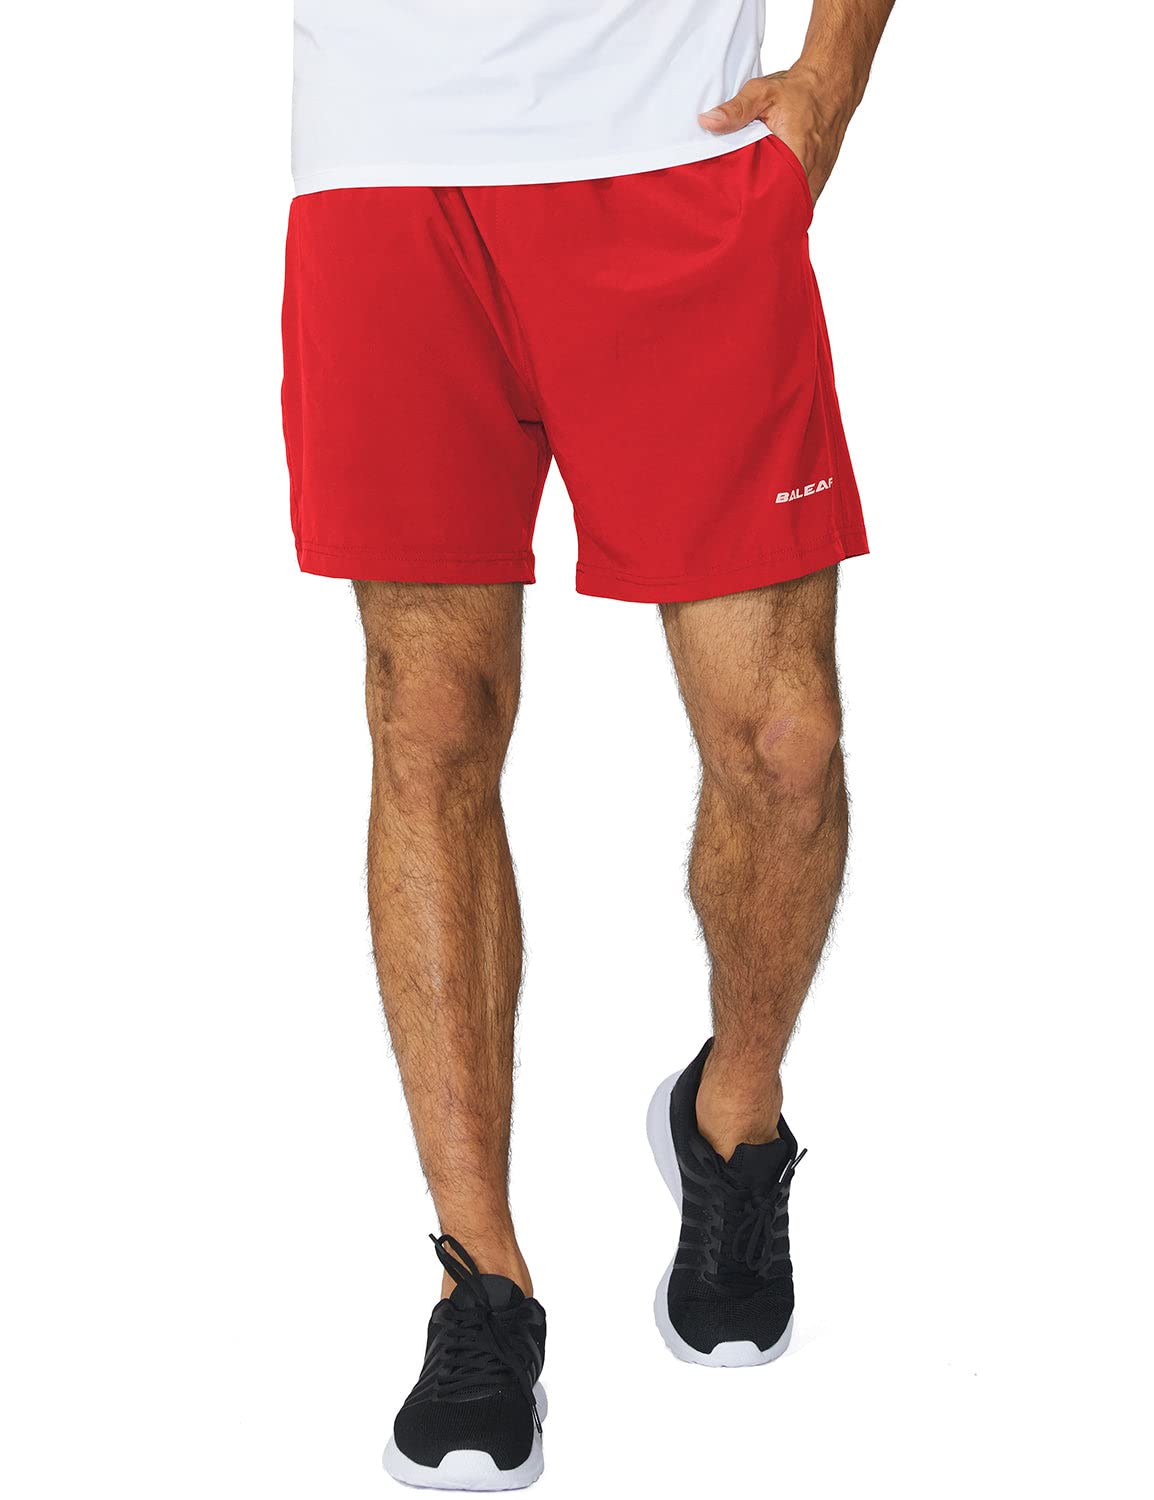 BALEAF Men's 5" Running Shorts Lightweight Gym Shorts Men with Zipper Pocket Lined Quick Dry